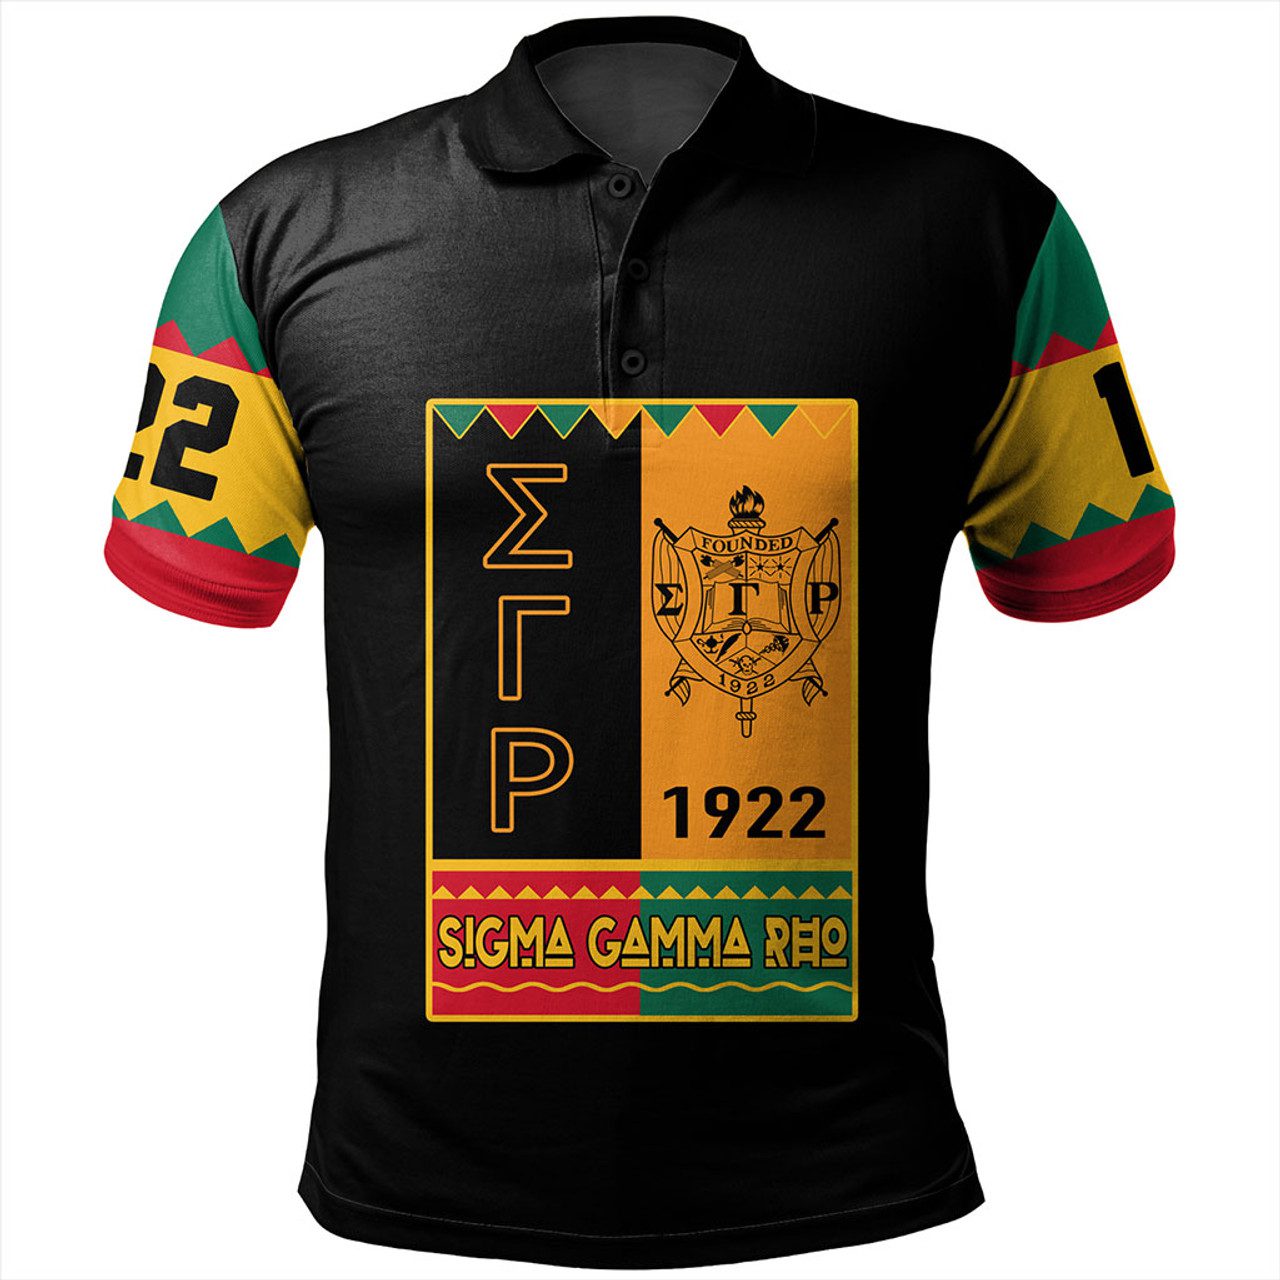 Sigma Gamma Rho Polo Shirt Black History Month